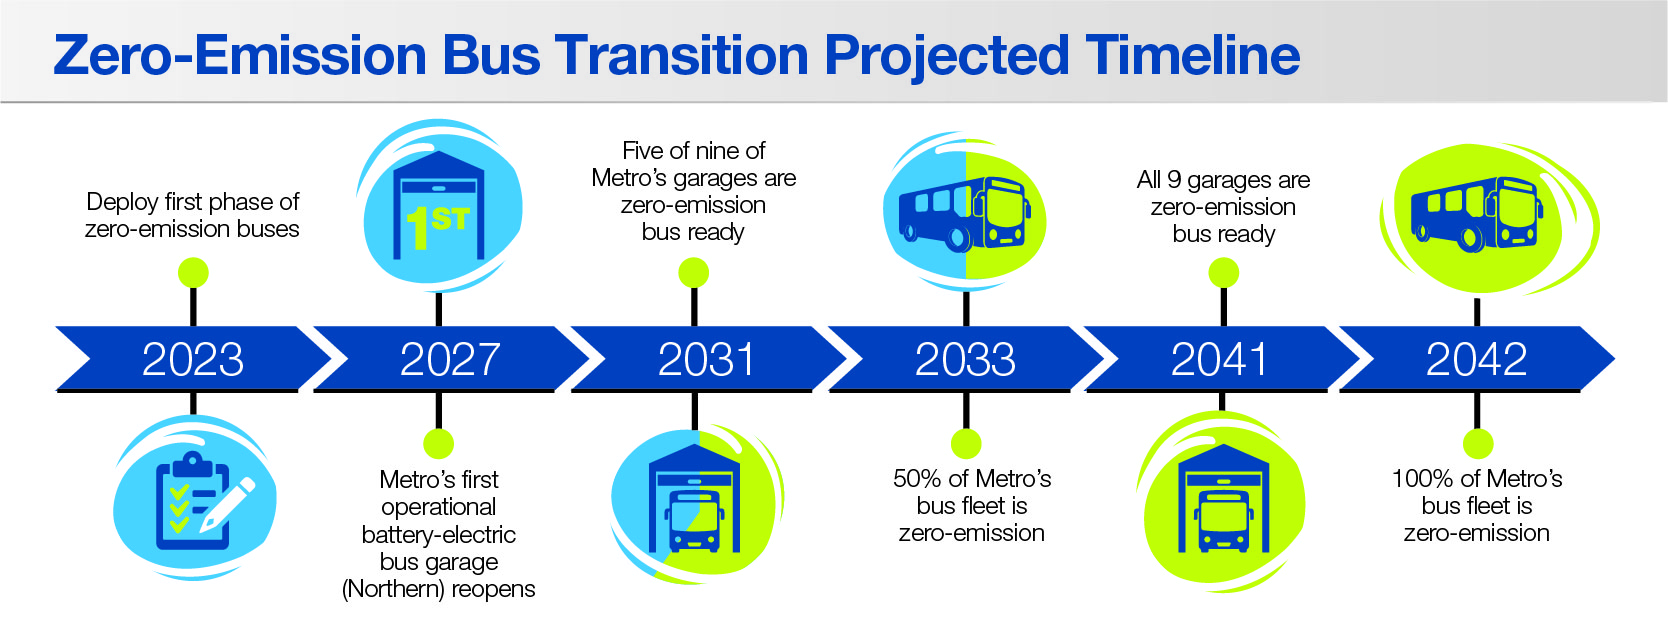 Zero-Emission Bus Transition Timeline